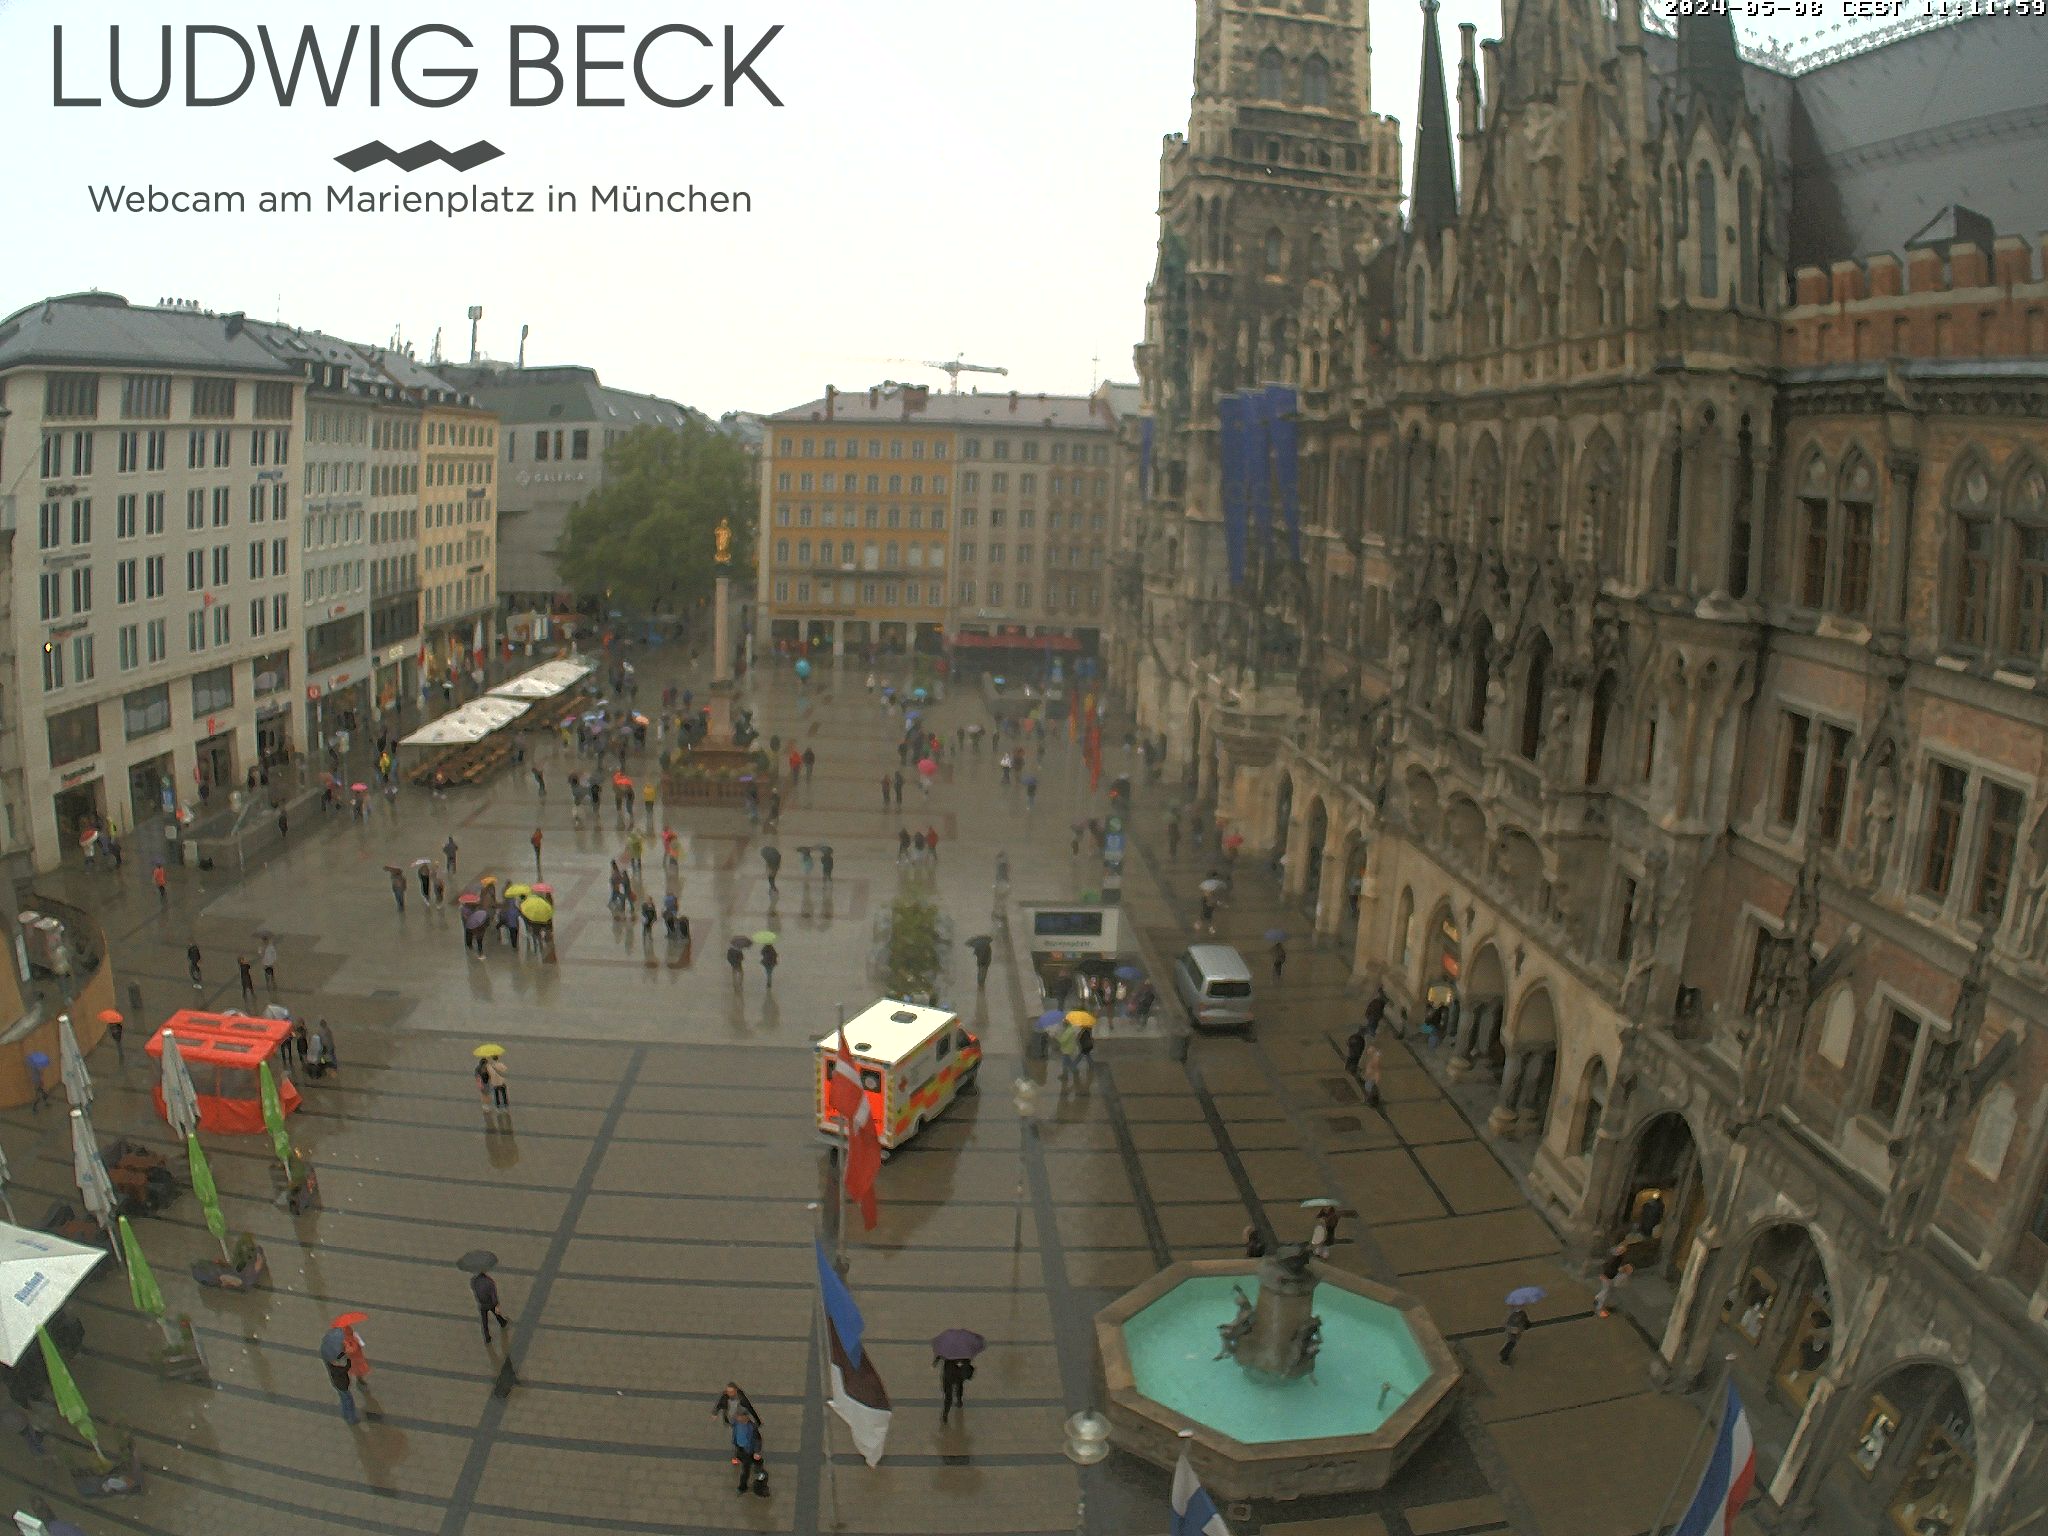 Webcam München Ludwig Beck